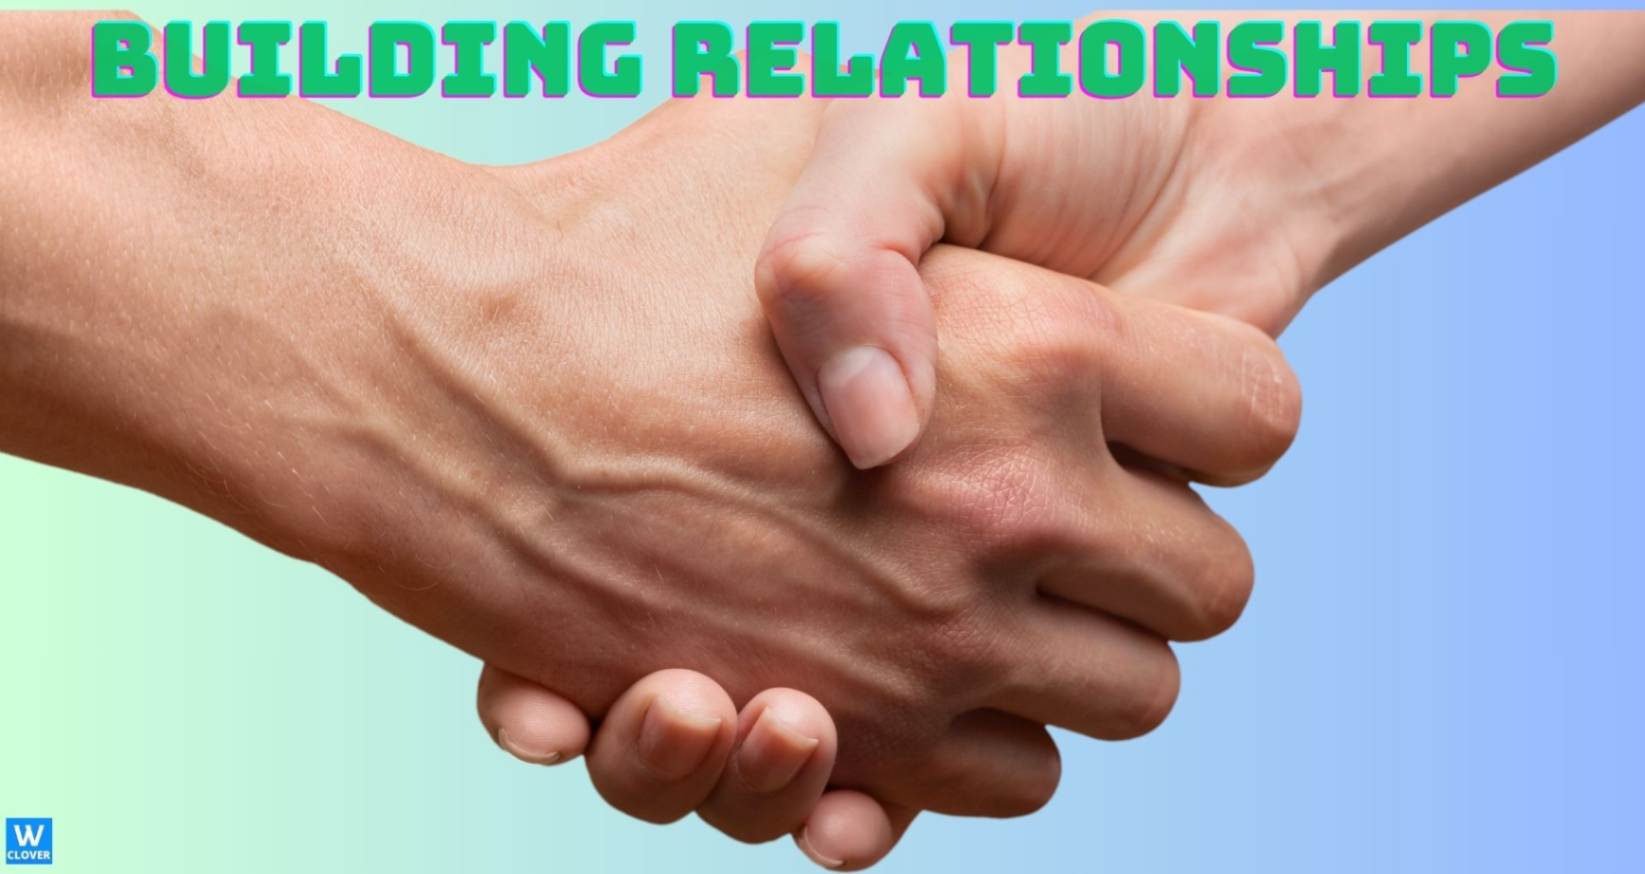 building relationships